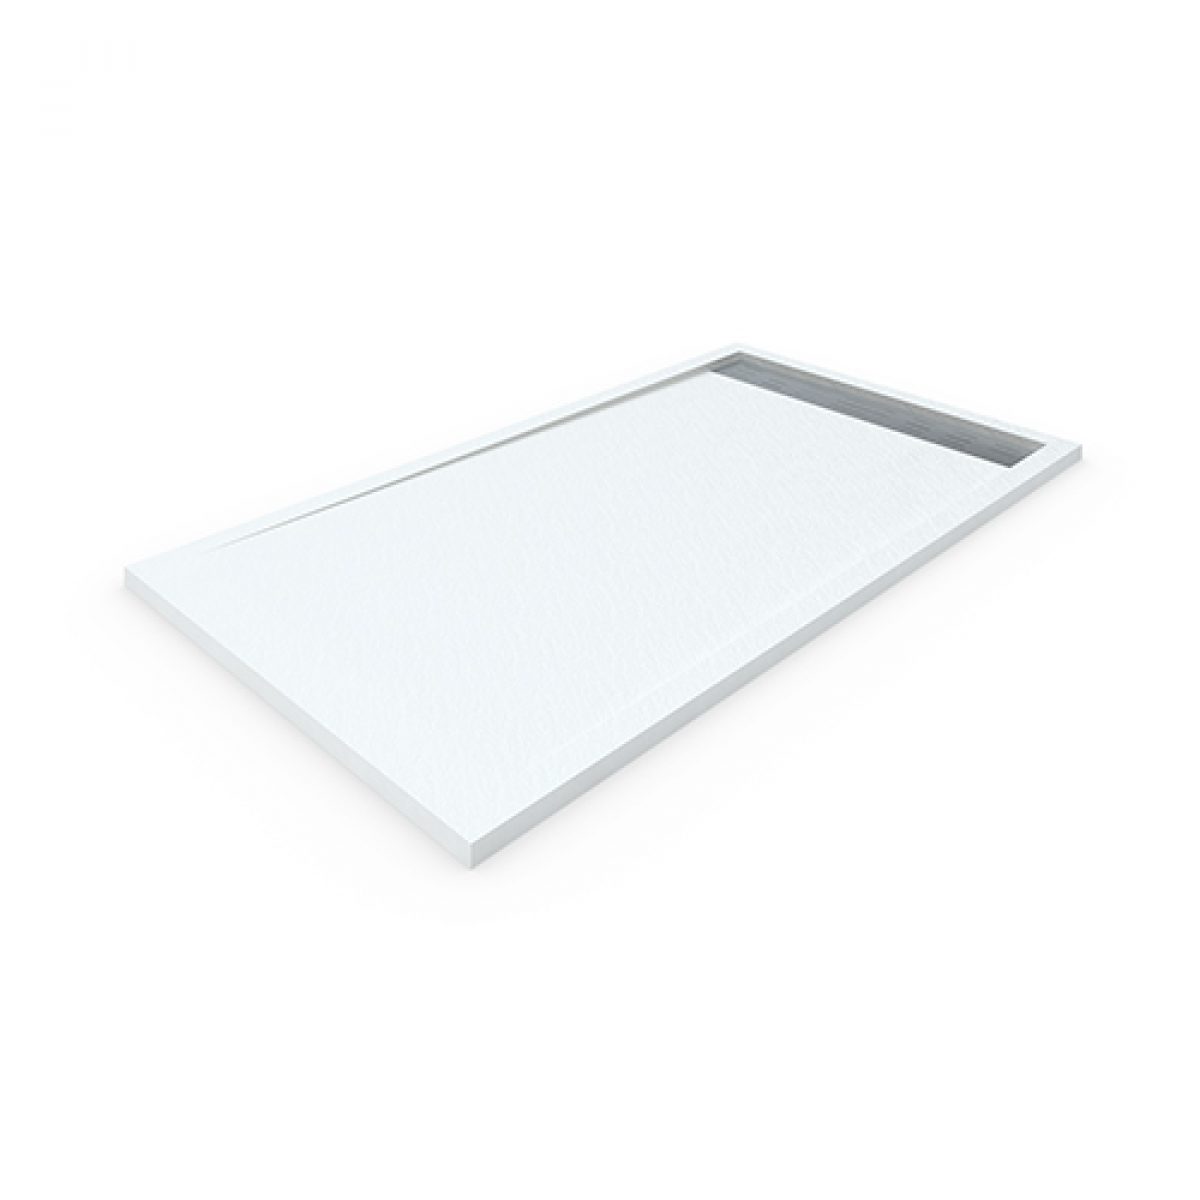 Plato de ducha con marco blanco 80x120 cm